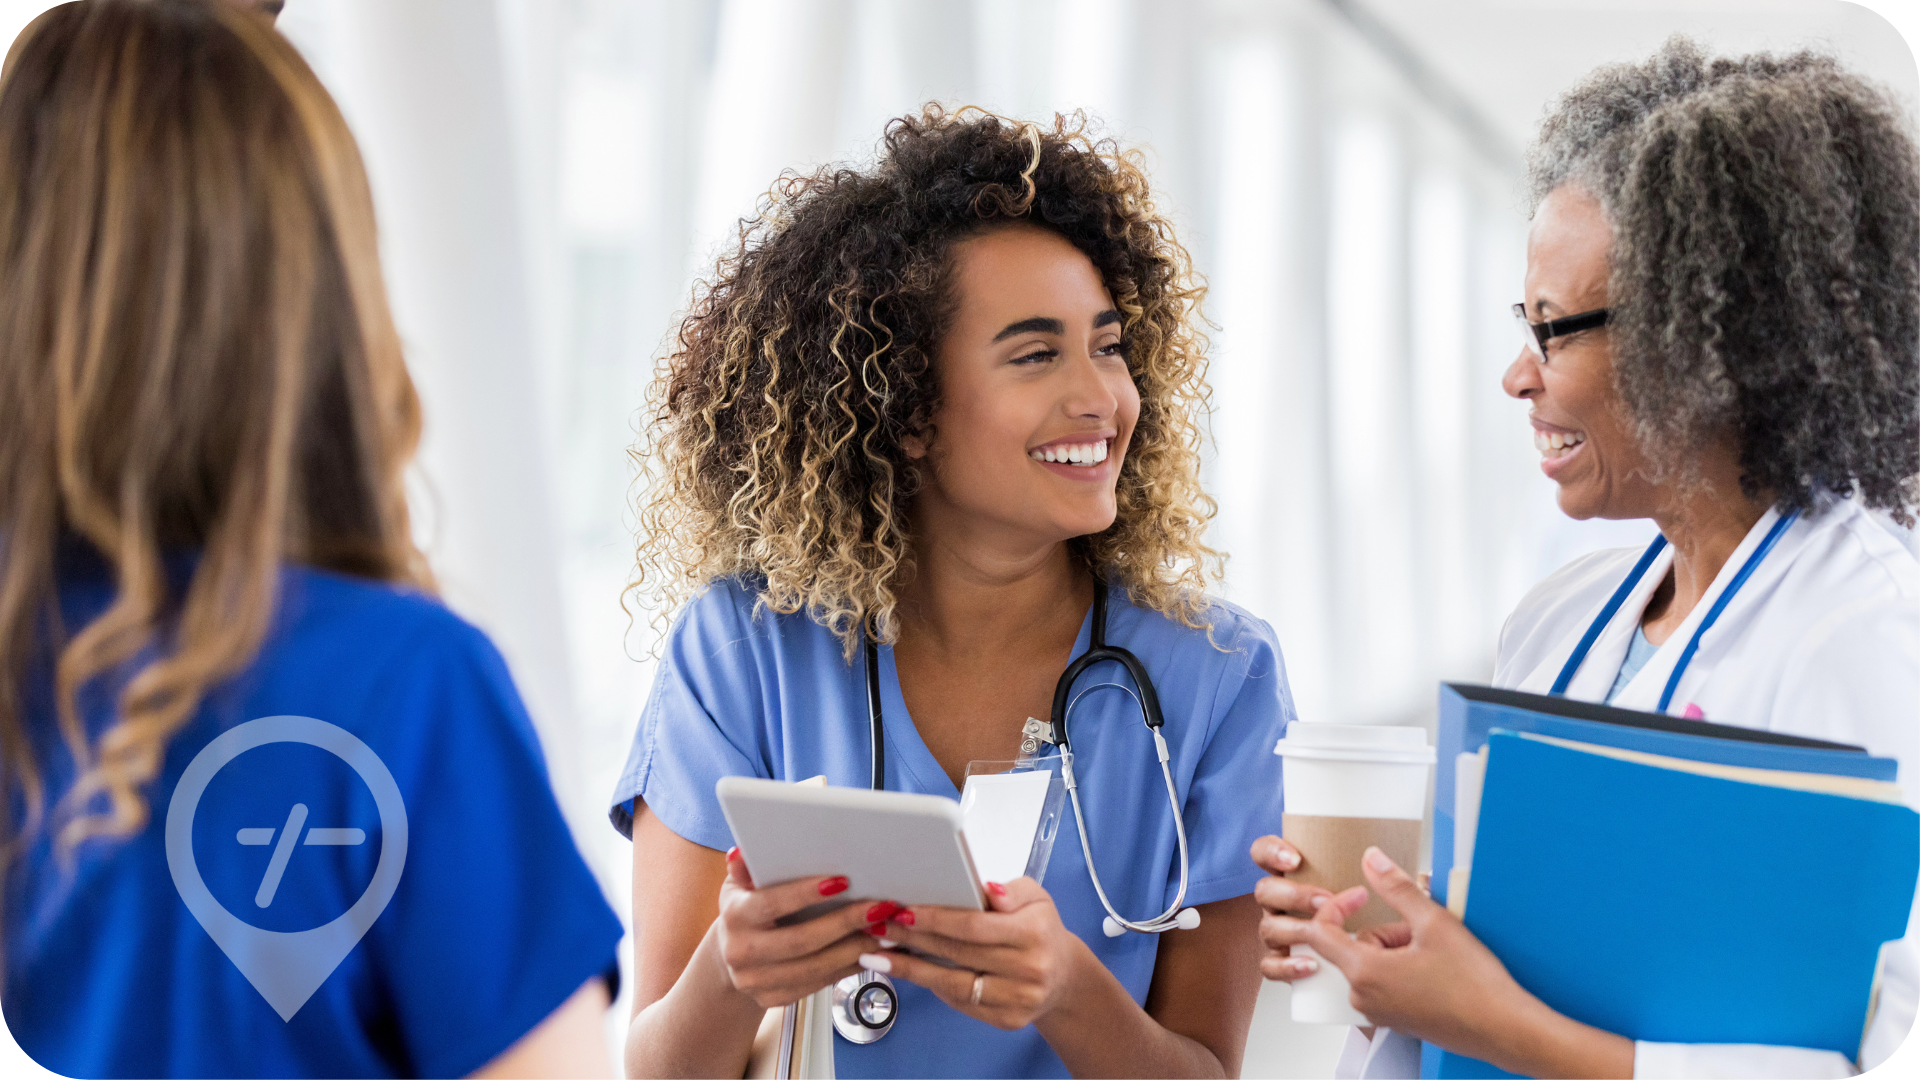 ShiftMed Blog - Healthcare Staffing News, Nursing Career Tips & Insights